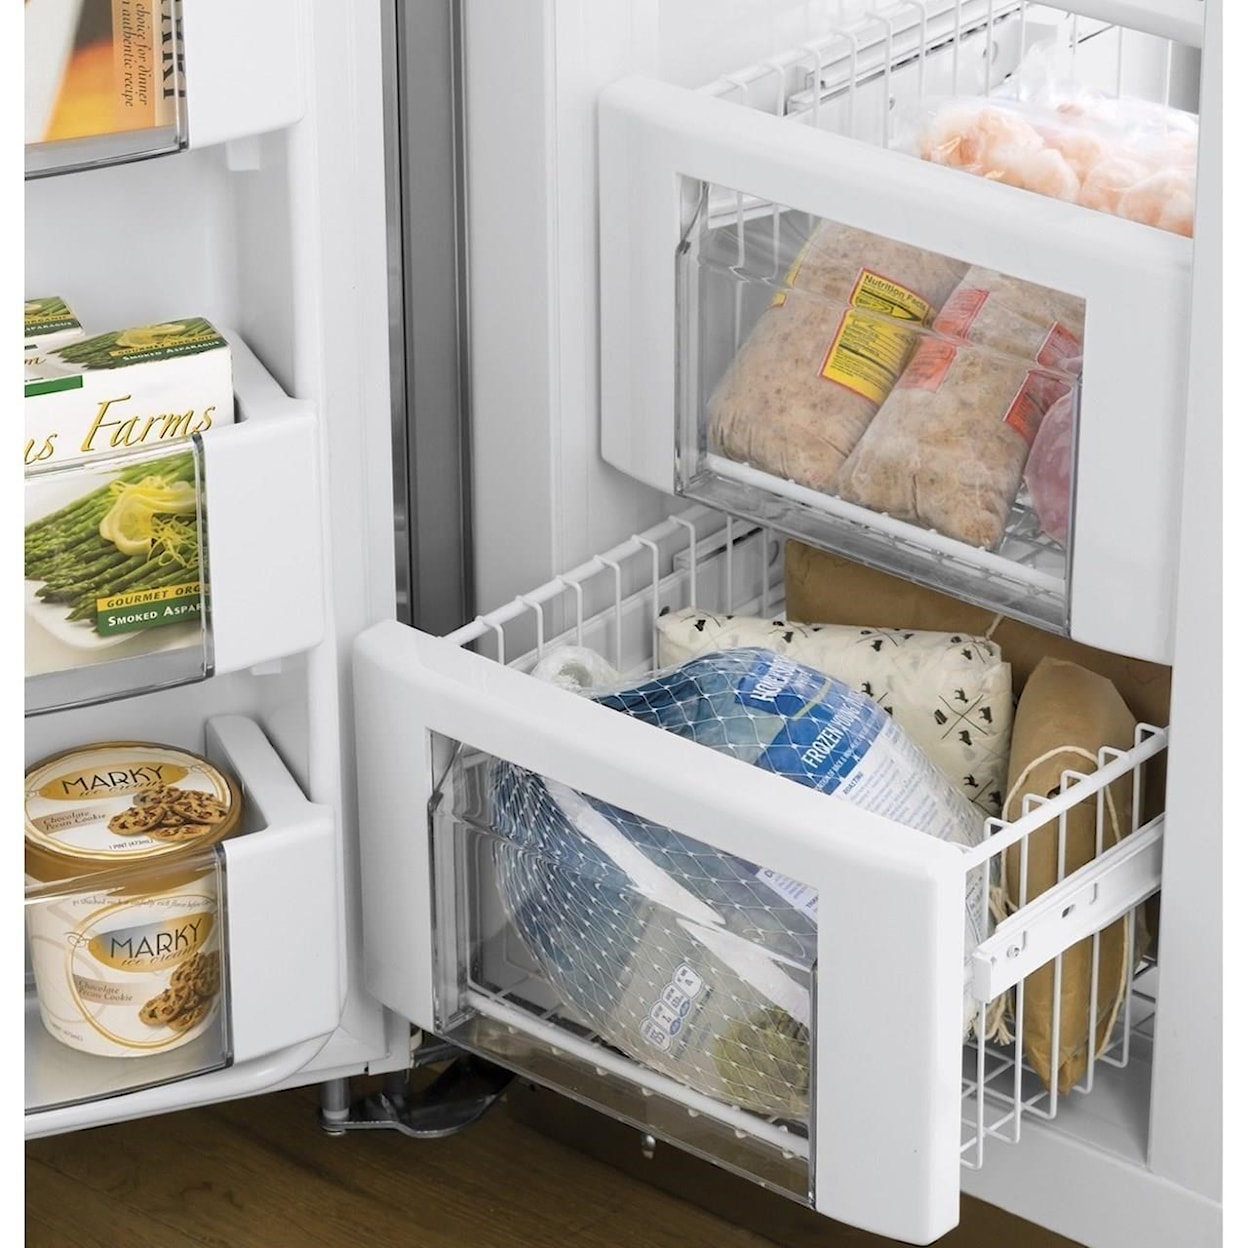 GE Appliances GE Profile Side-By-Side Refrigerators GE Profile™ Series 42" Smart Refrigerator